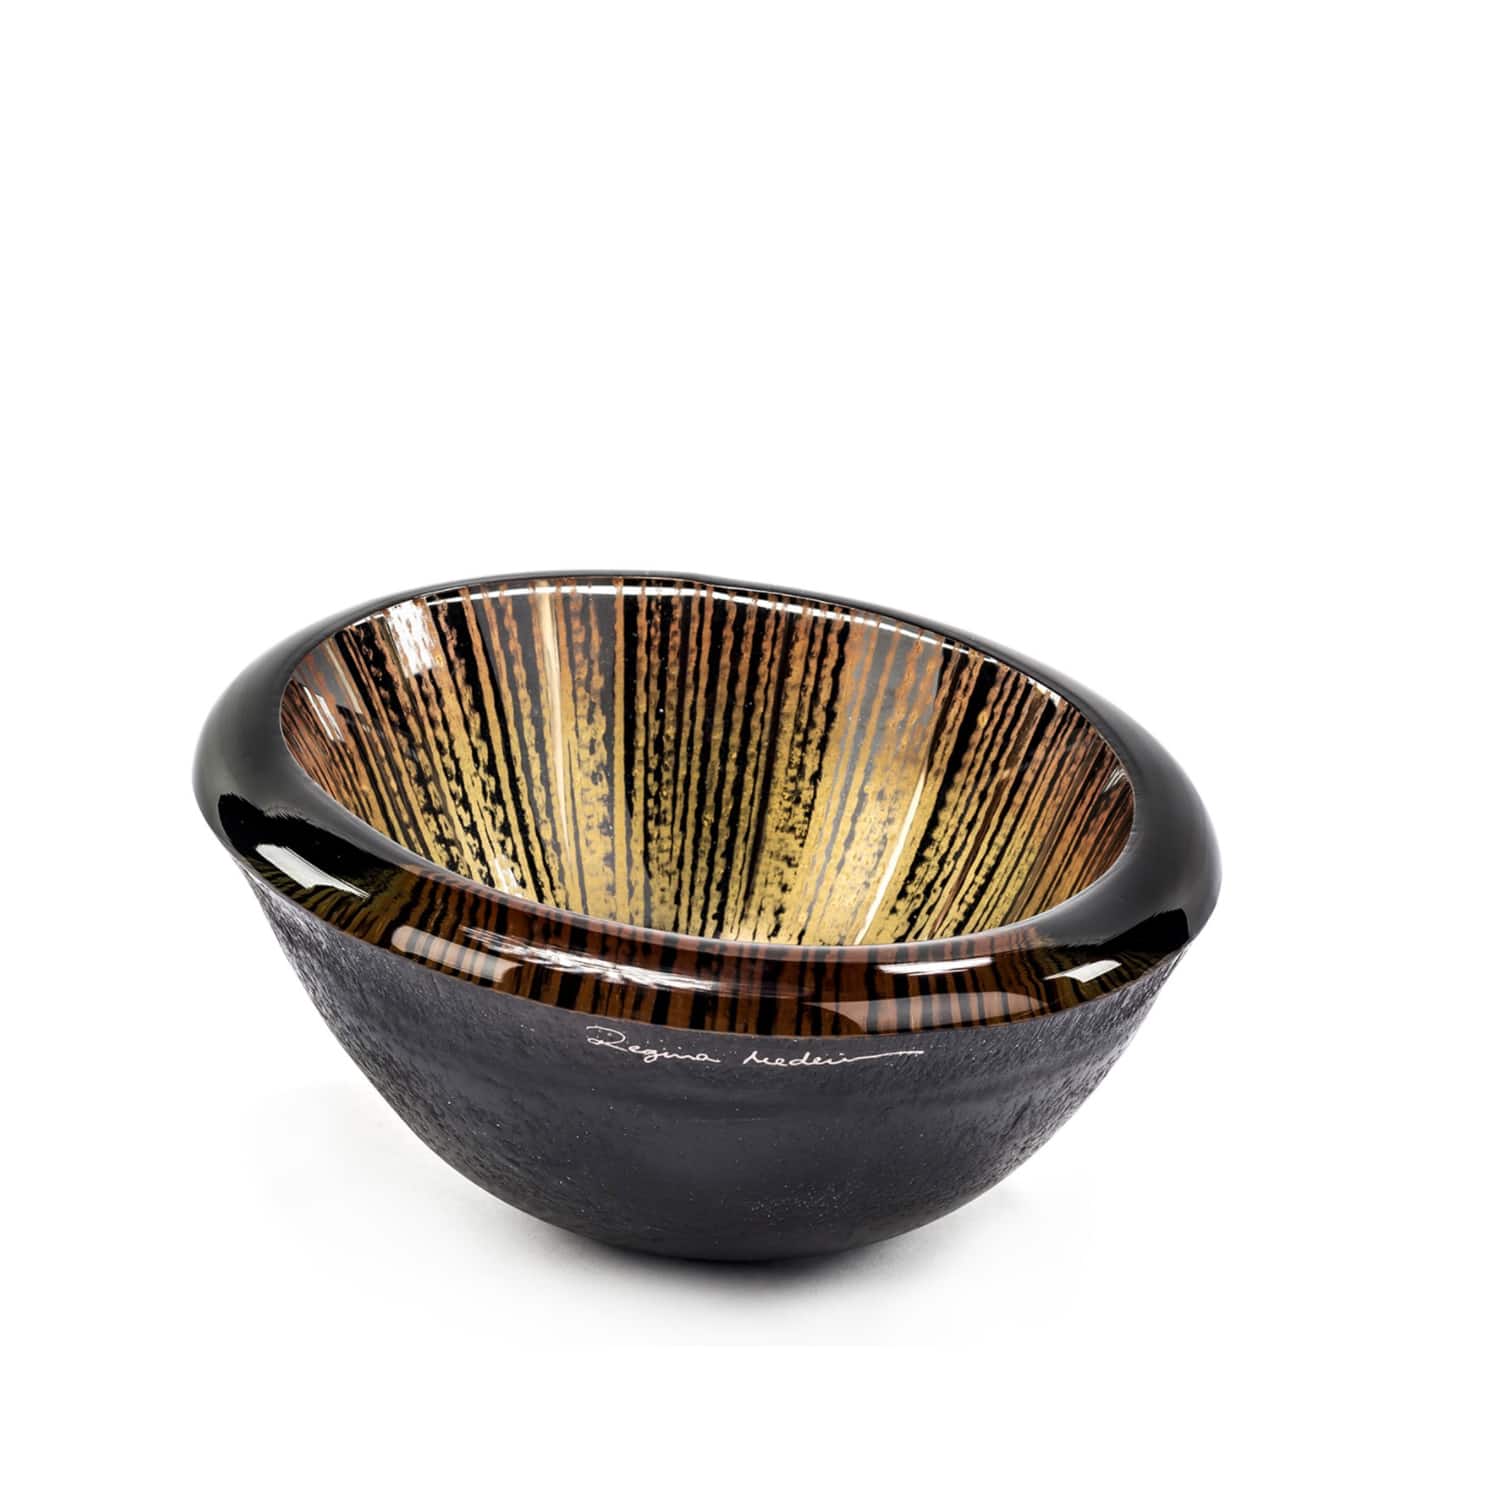 Designer bronze glass bowl